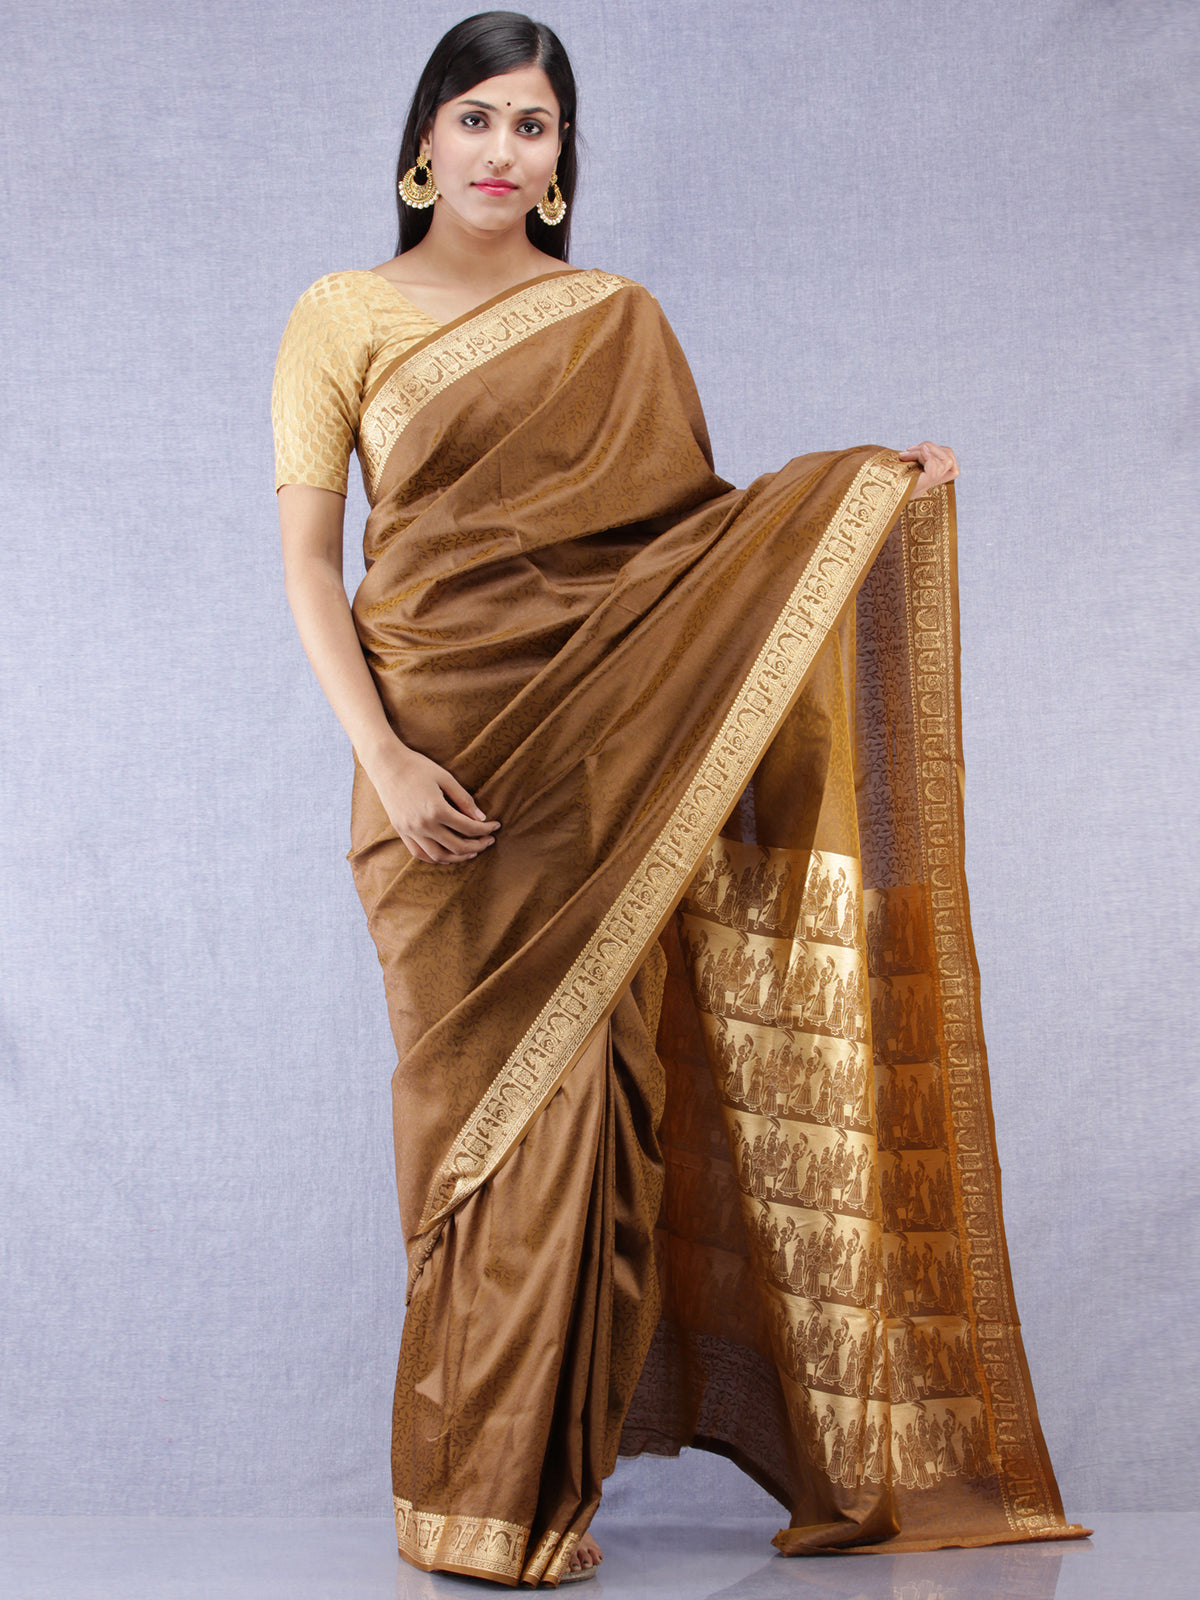 Banarasee Semi Silk Self Weave Saree With Resham Border - Peanut Brown Golden  - S031704316